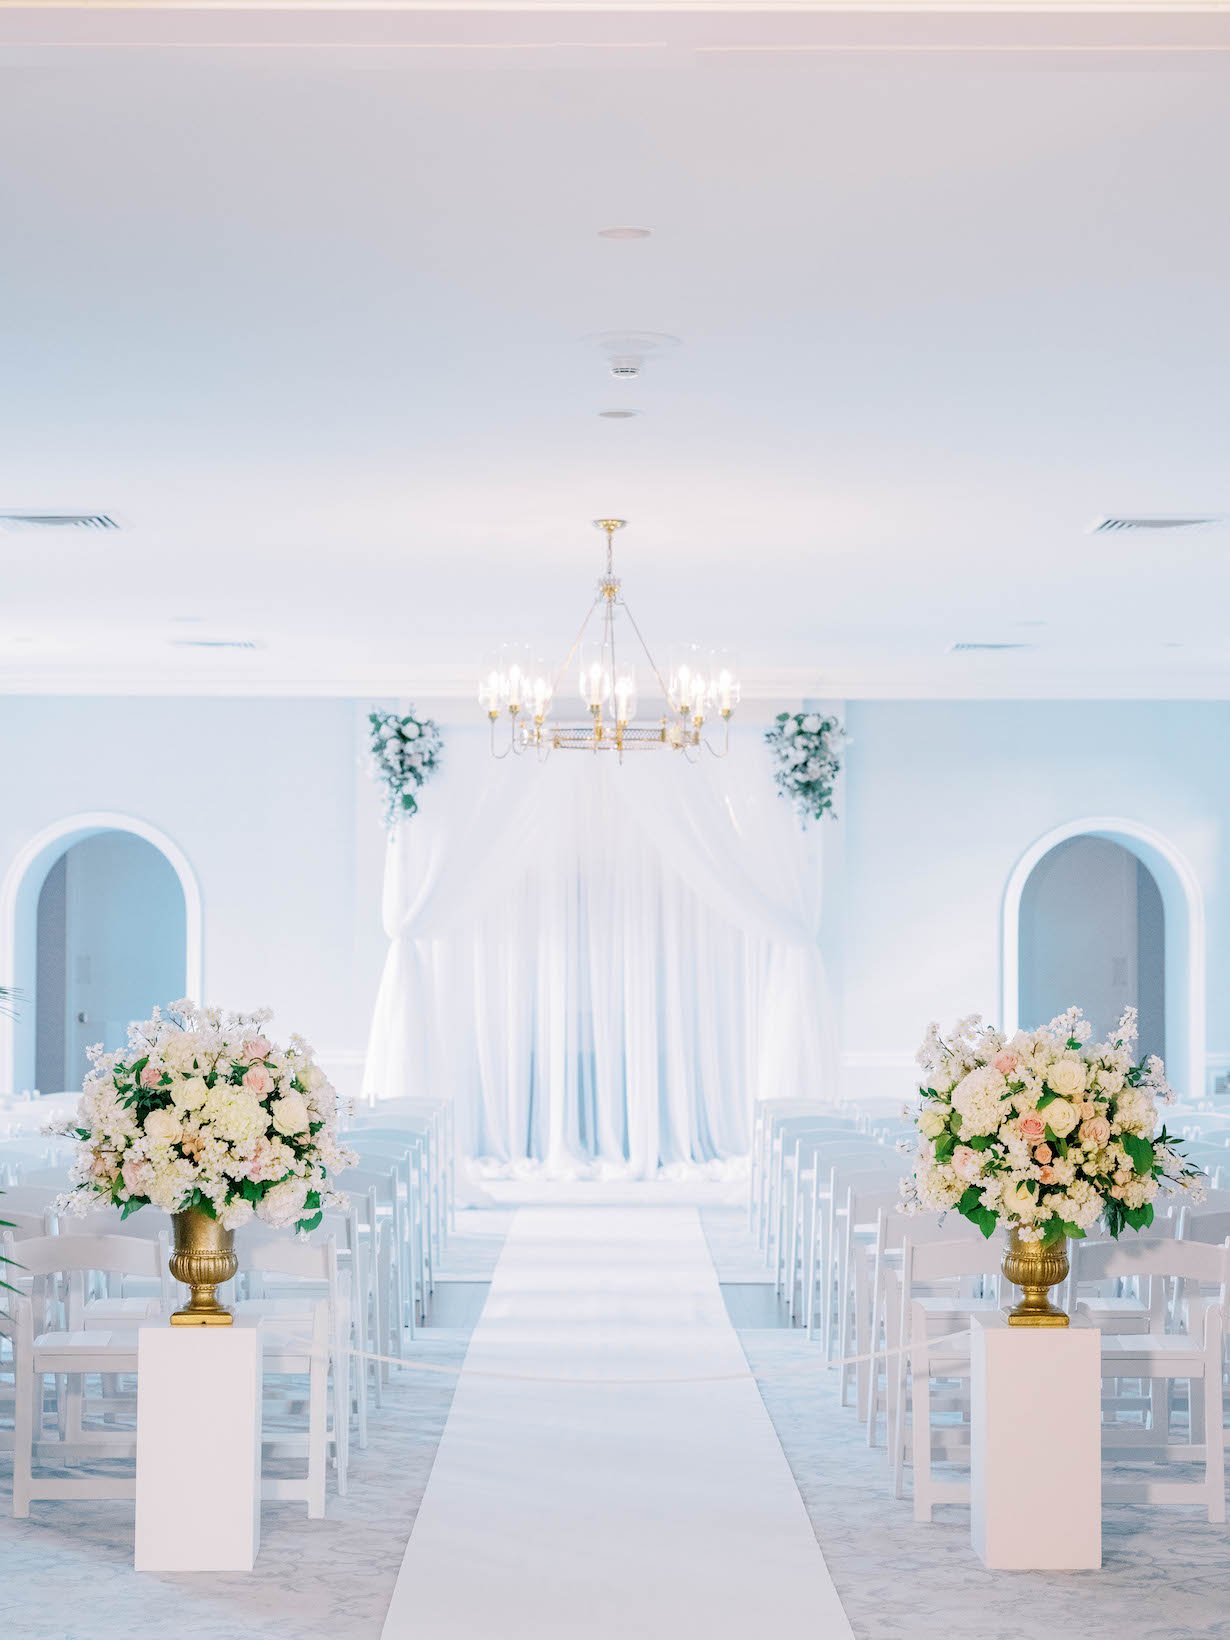 Belli-Fiori-Luxury-Wedding-Florist-Ceremony-Decor-Sarah-Harvey-Photography-image_297349.JPG